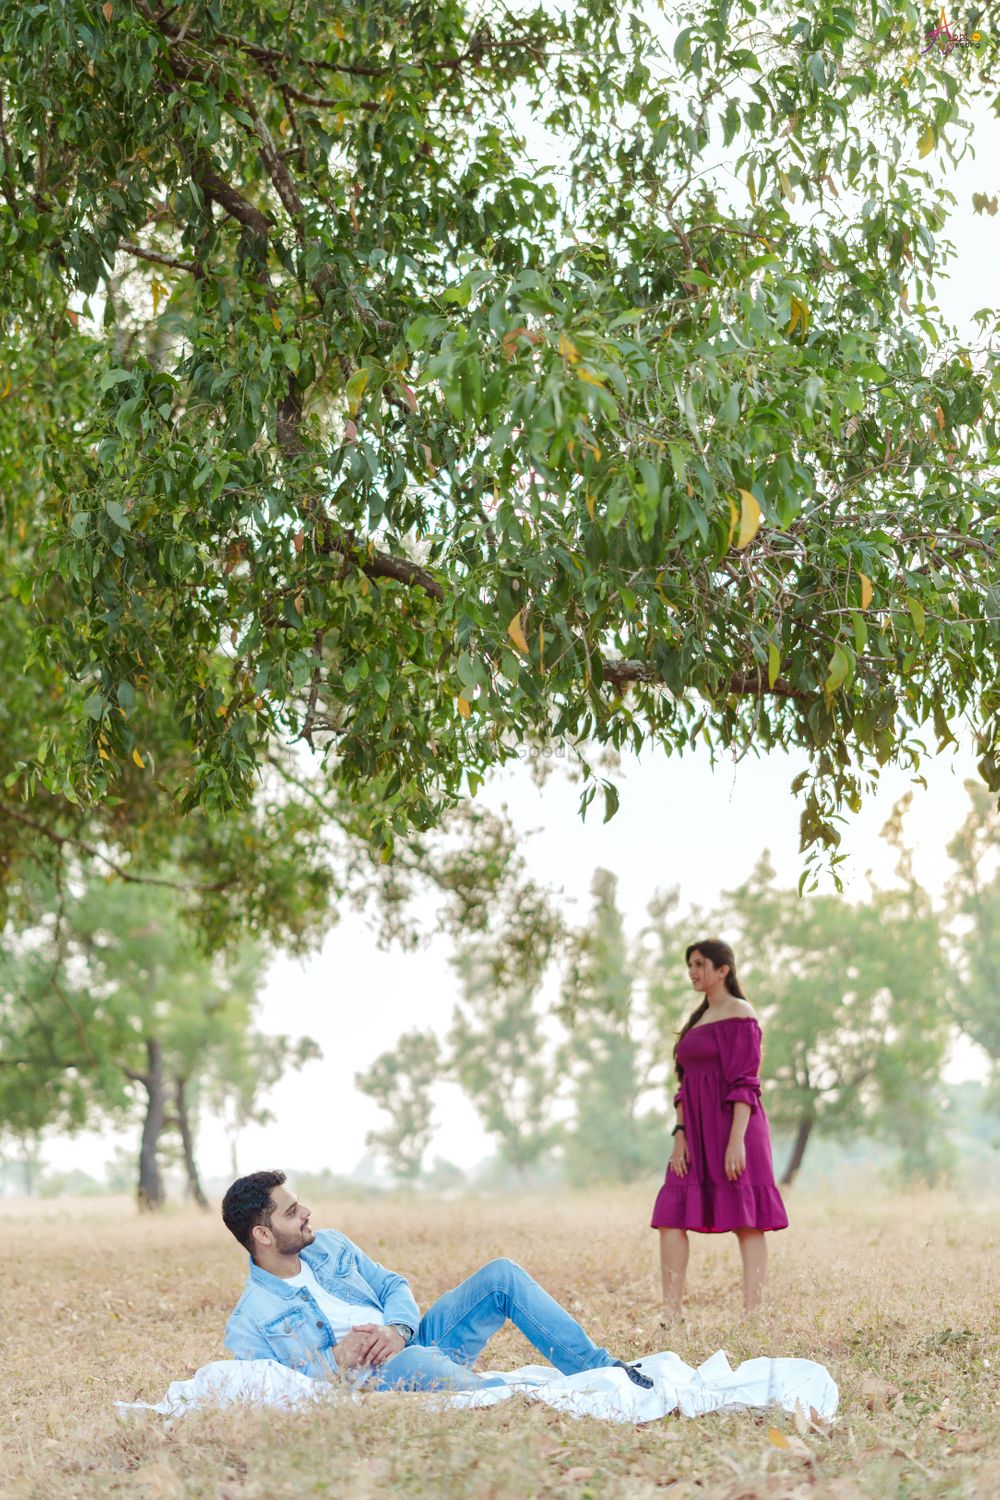 Photo By Abhi for Weddings - Photographers